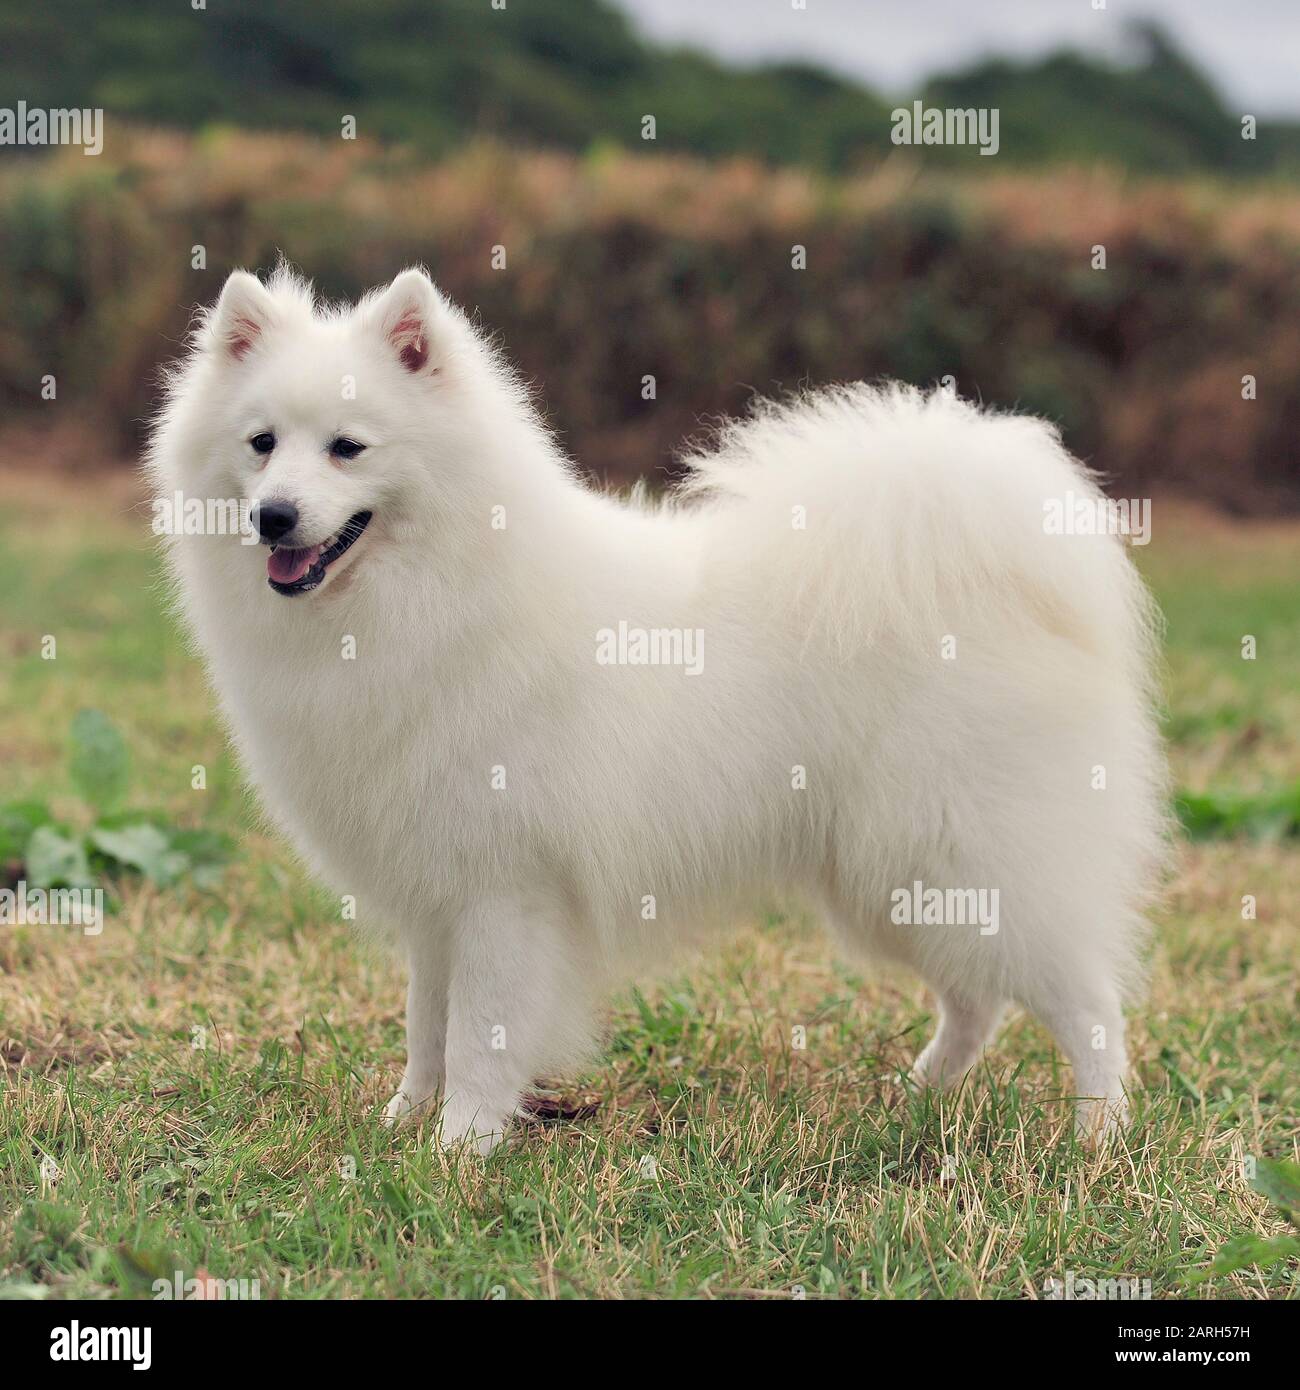 American eskimo dog -Fotos und -Bildmaterial in hoher Auflösung – Alamy